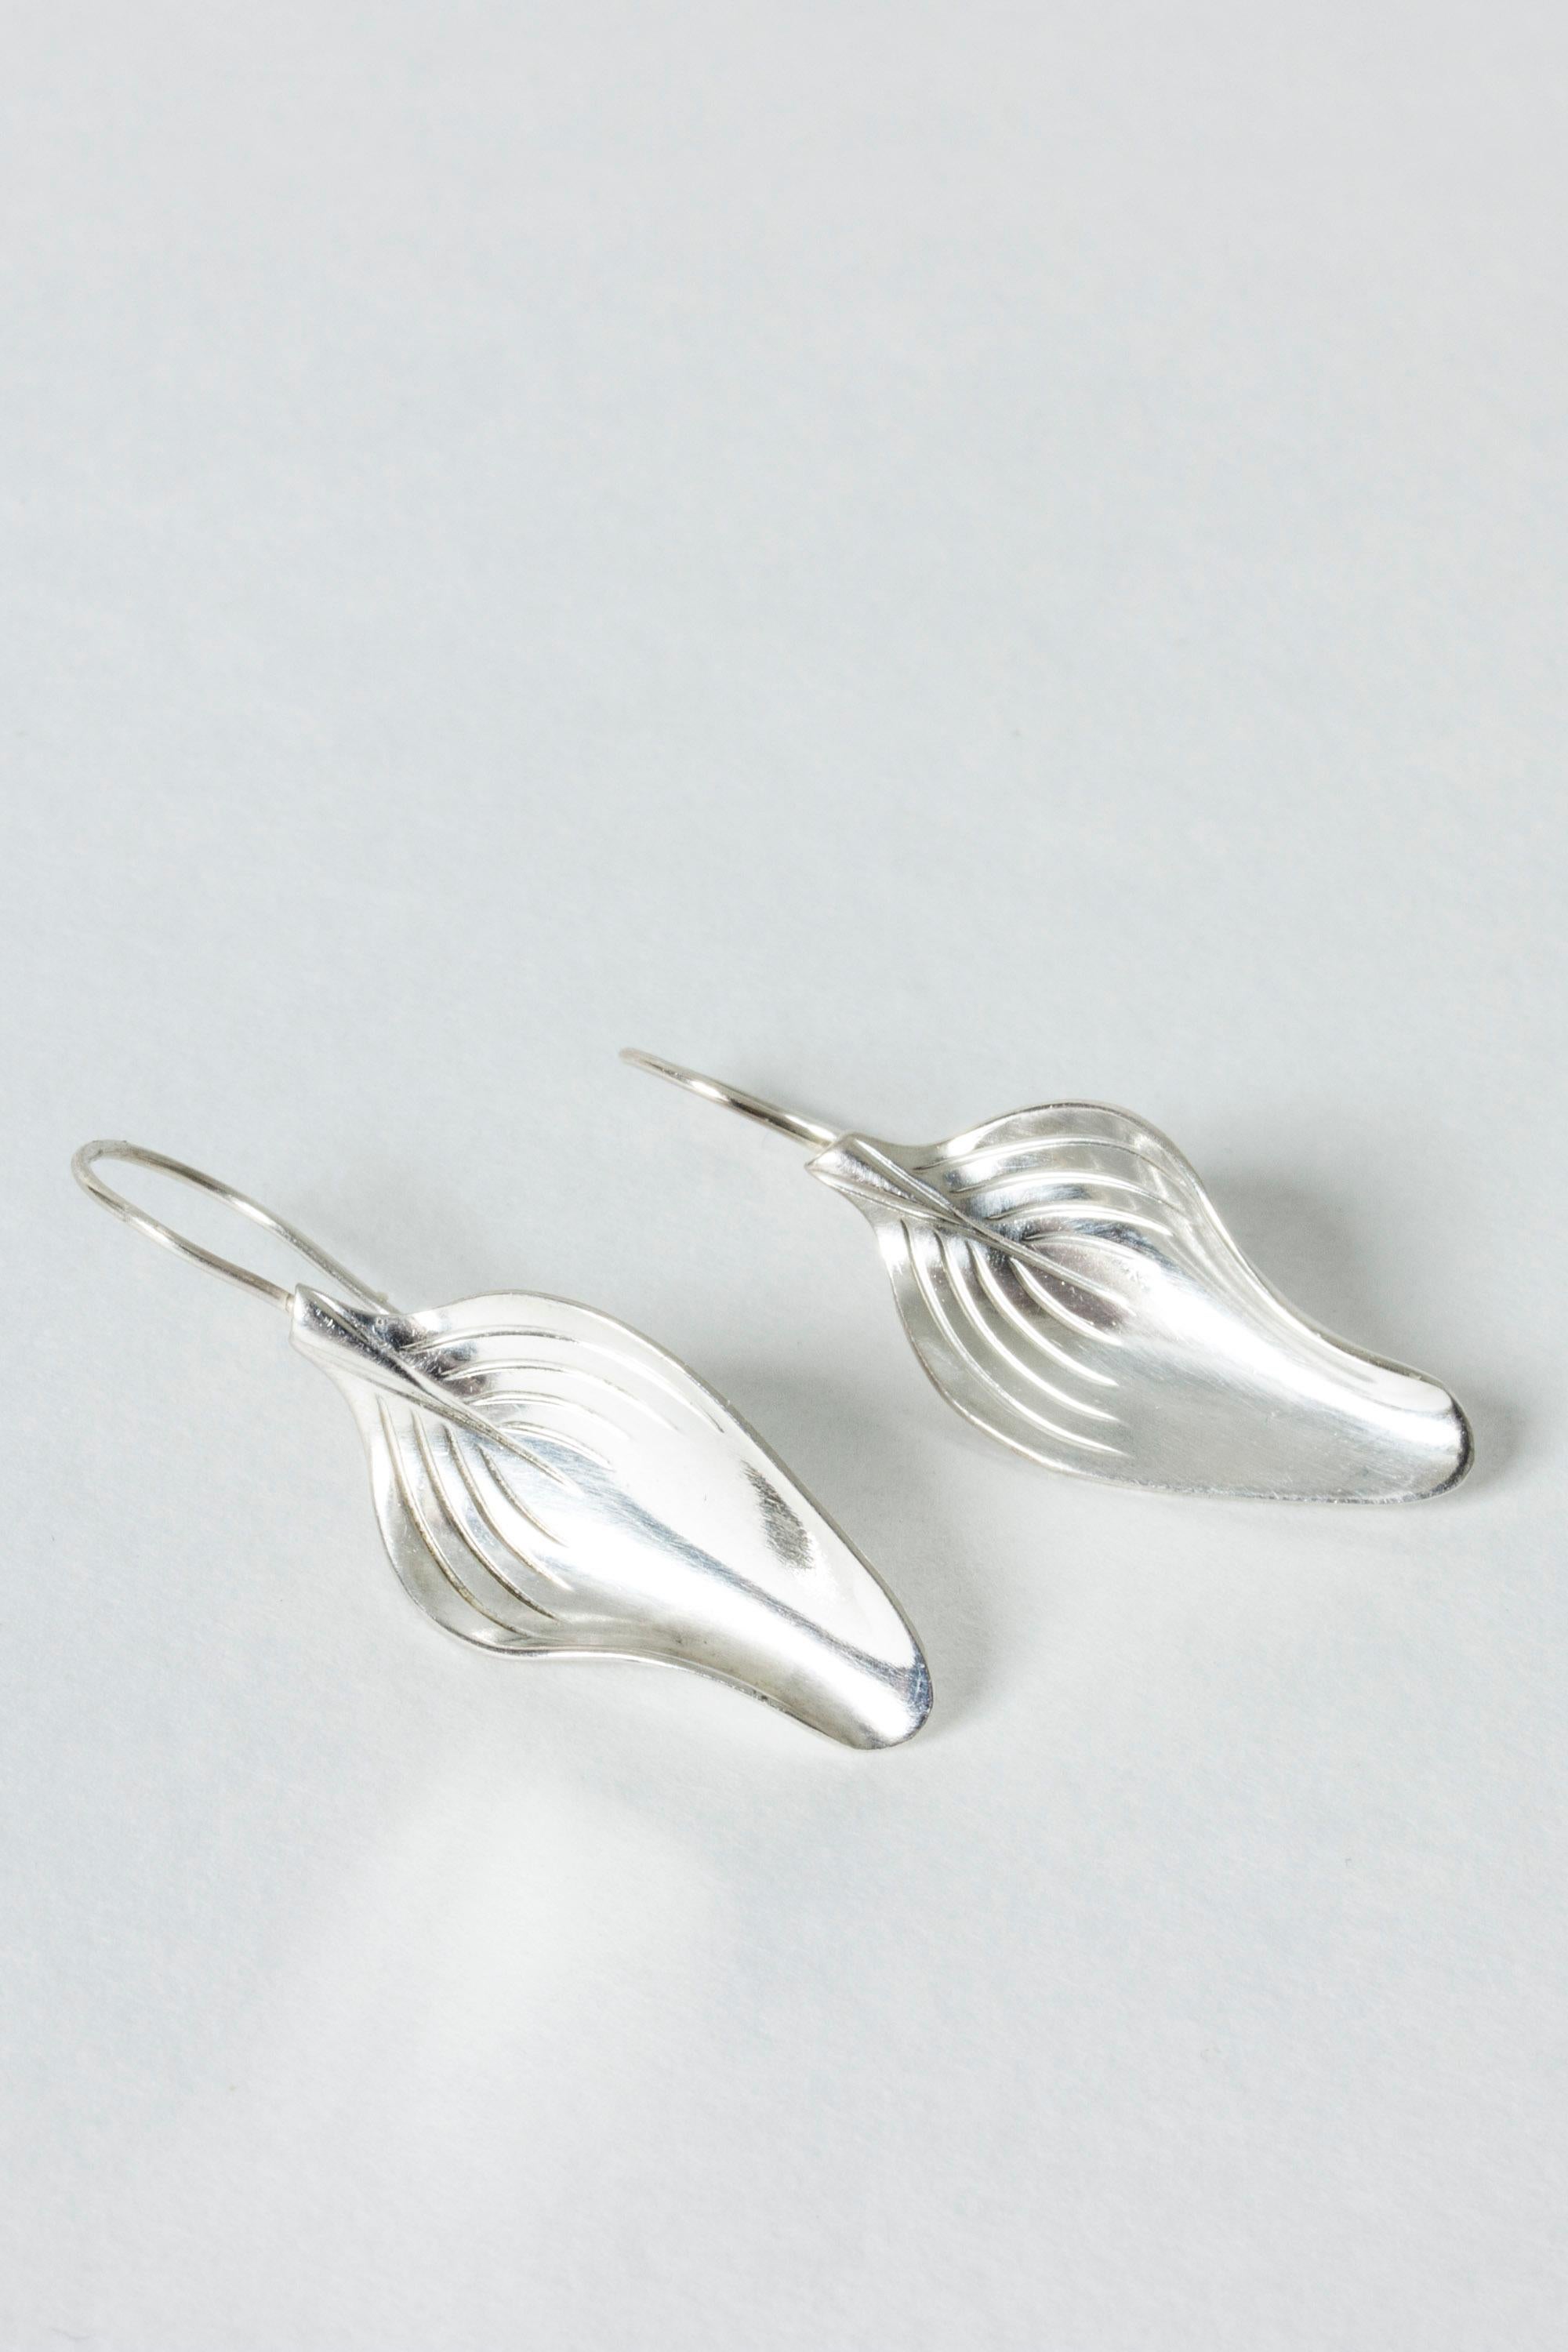 Modernist Pair of Silver Earrings by Viggo Wollny, Denmark, 1950s